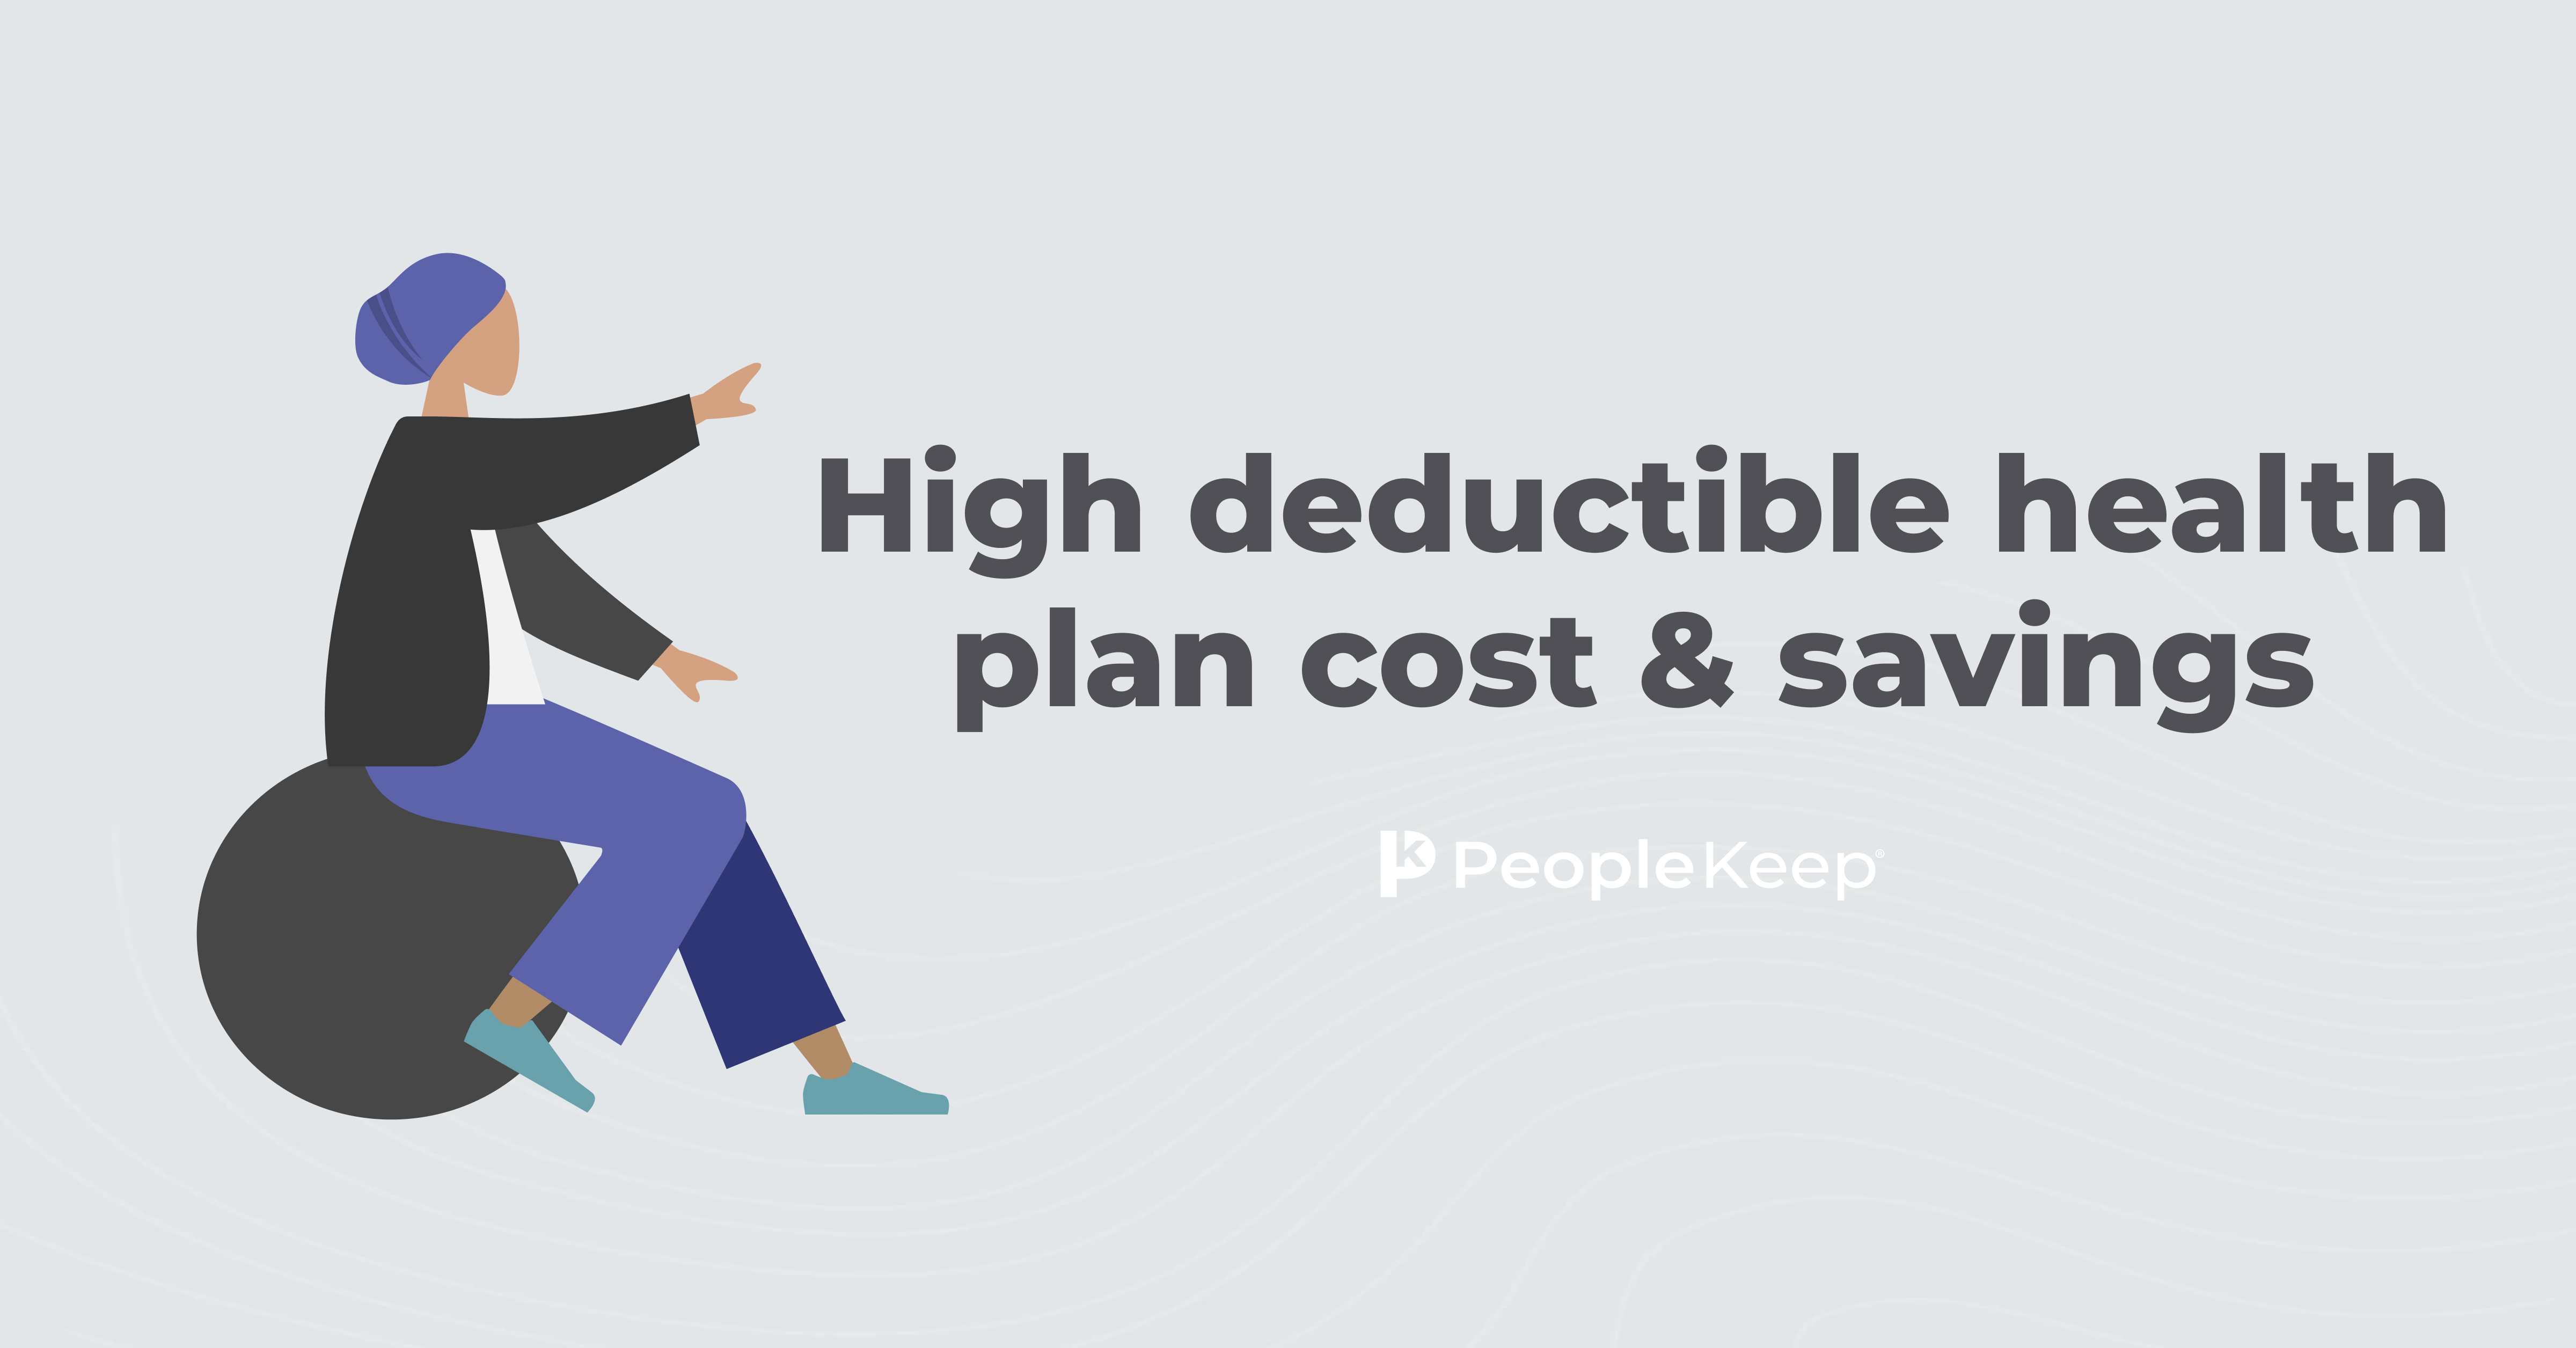 High deductible health plan cost & savings